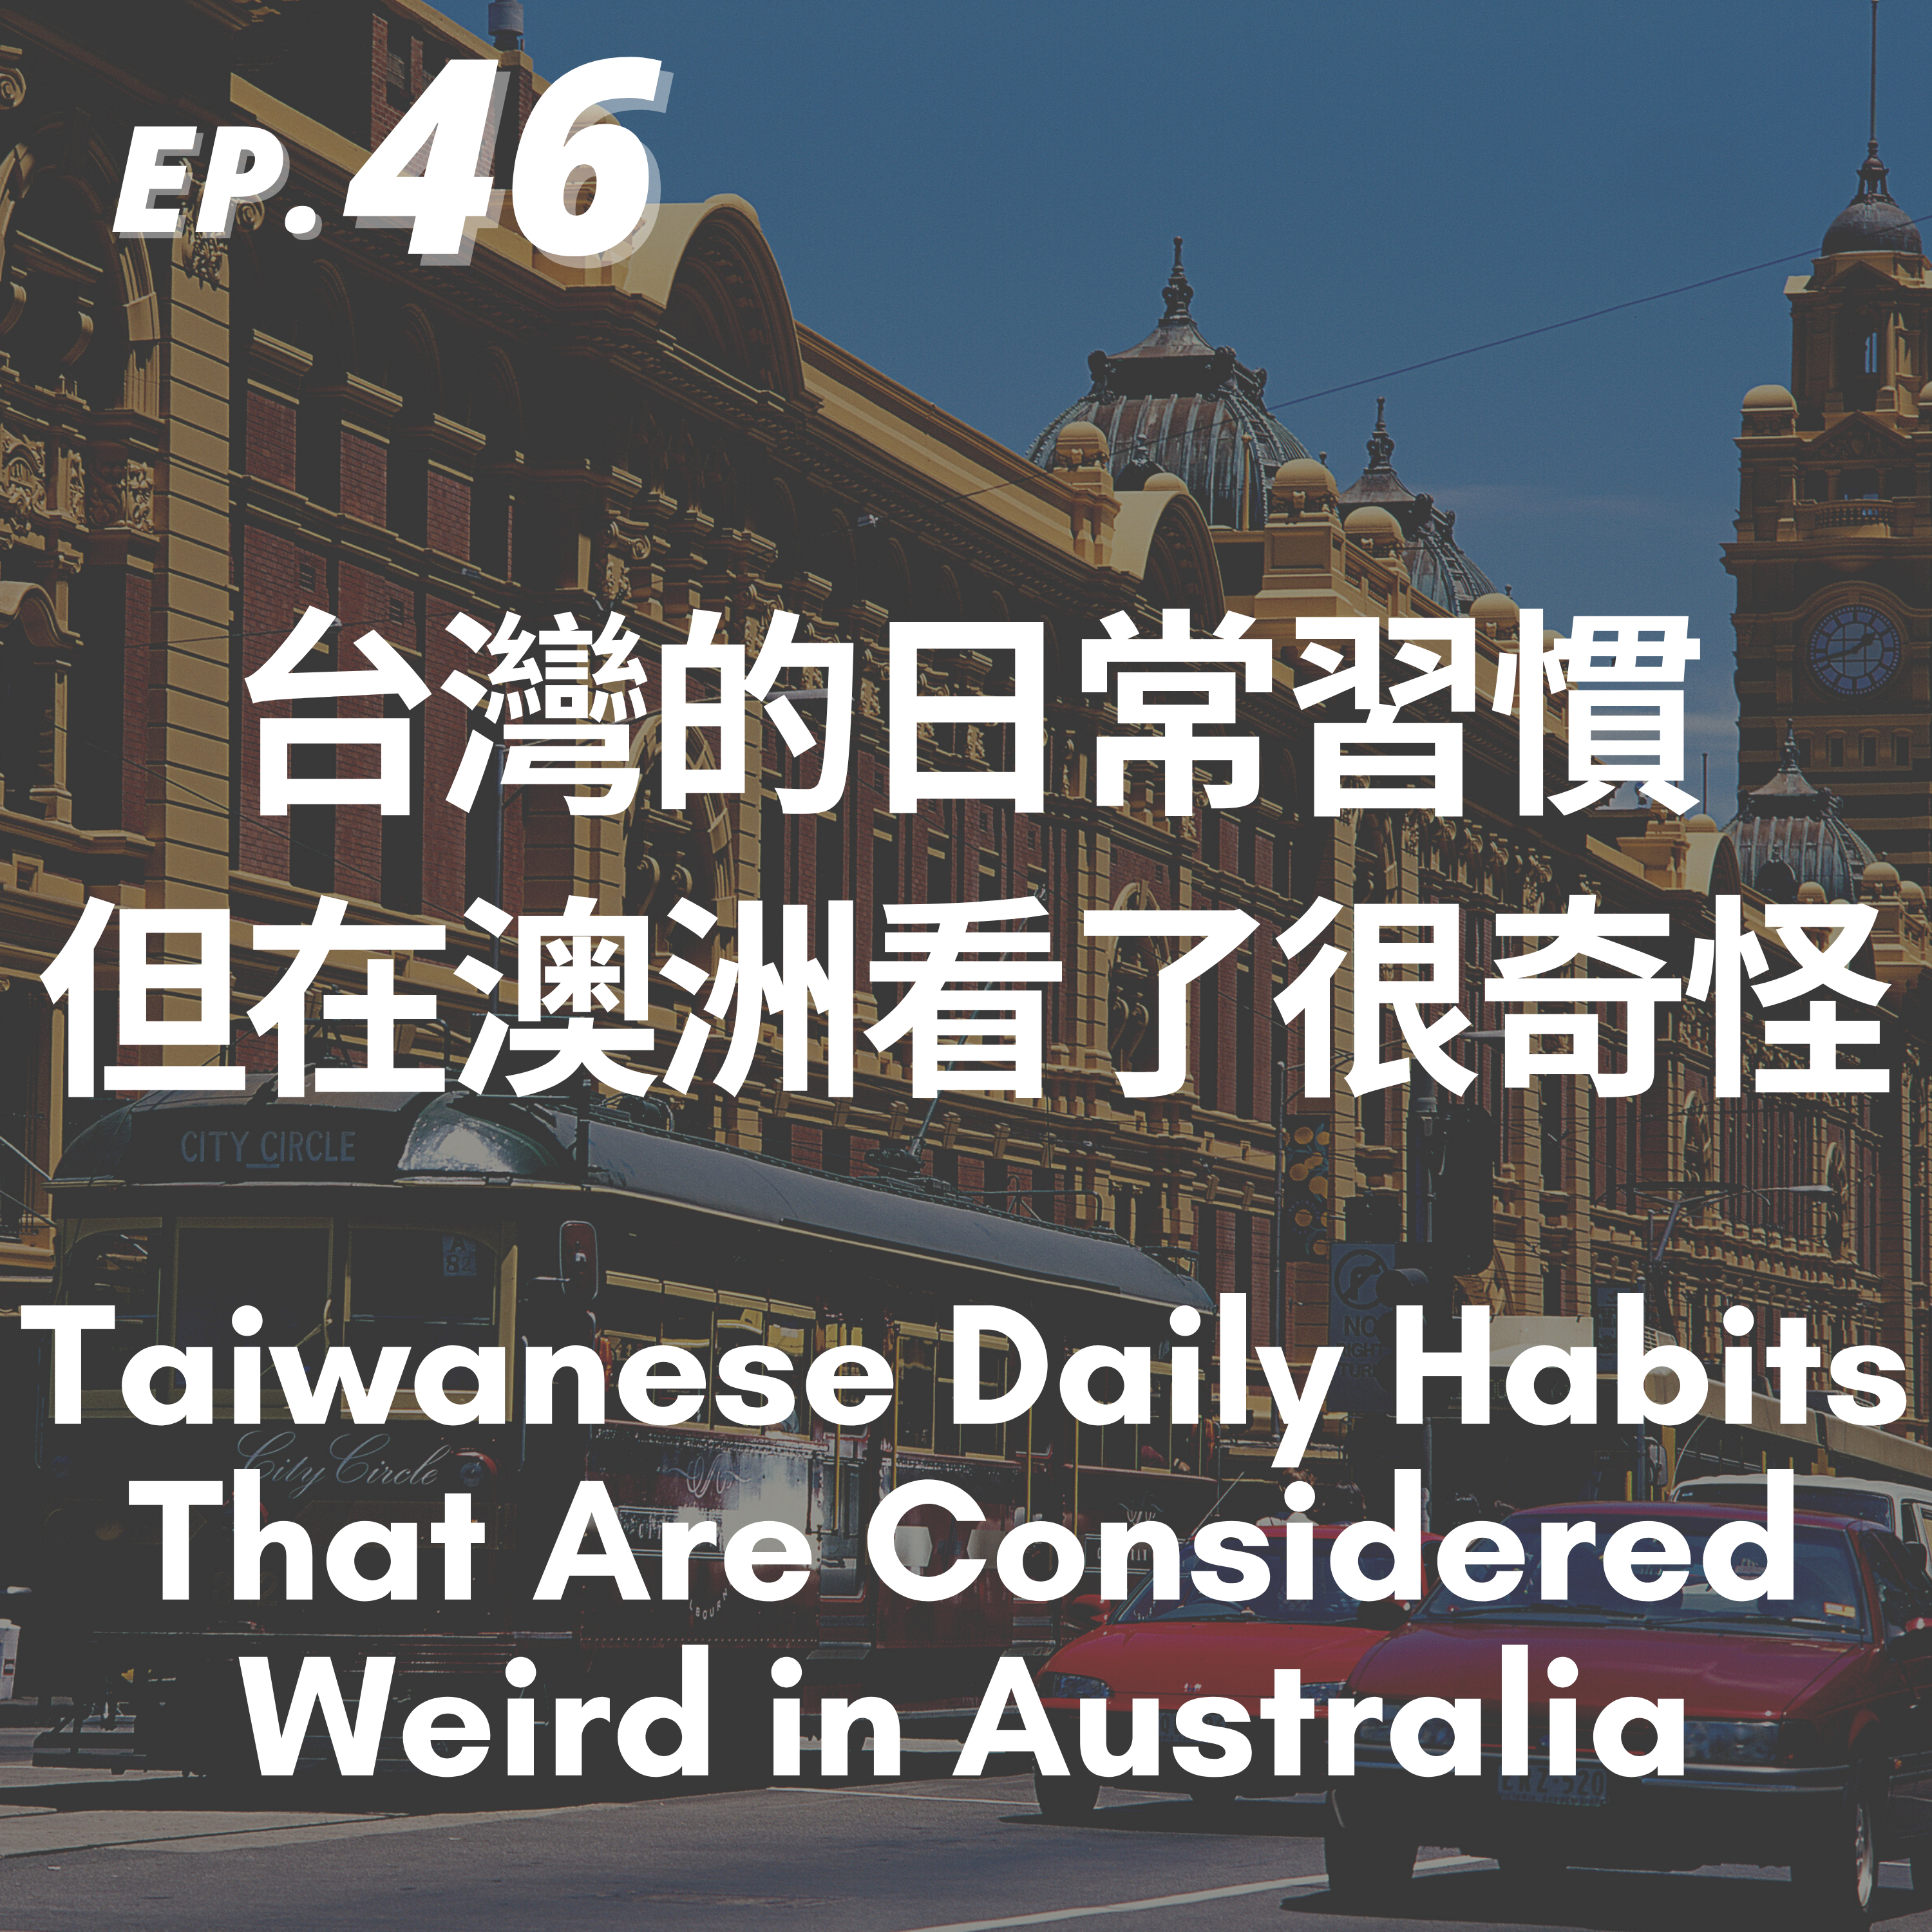 46. 台灣的日常習慣但在澳洲看了很奇怪 Taiwanese Daily Habits That Are Considered Weird in Australia